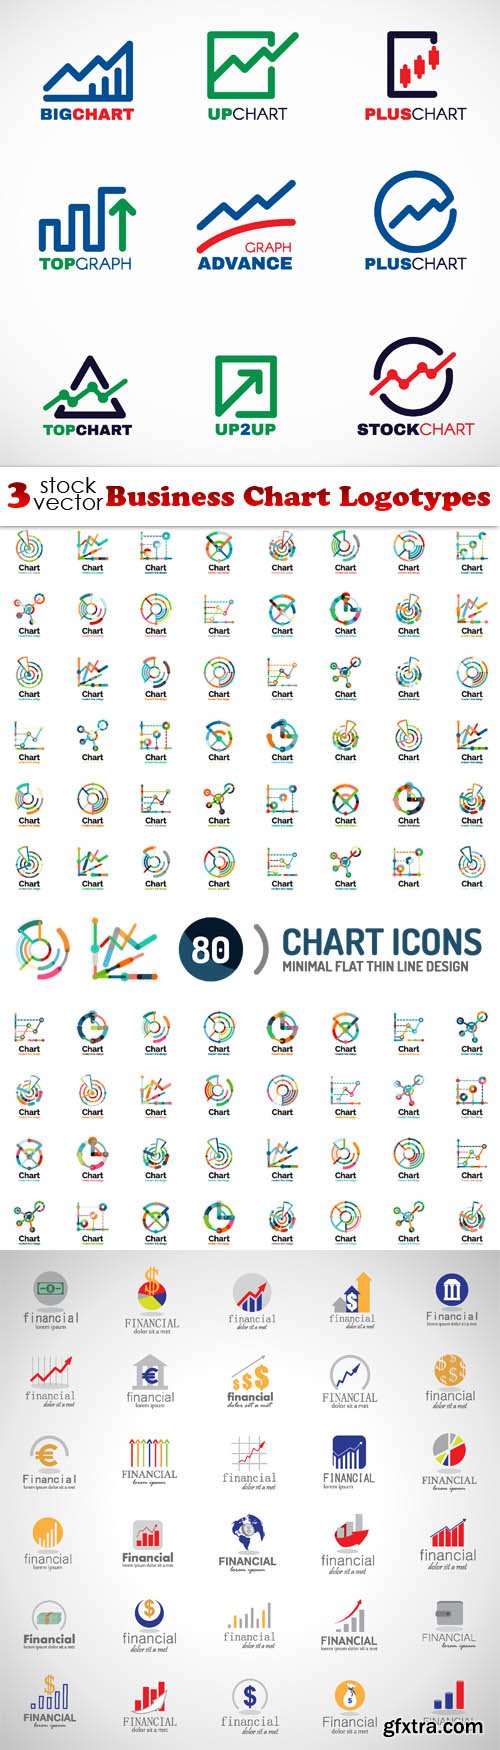 Vectors - Business Chart Logotypes